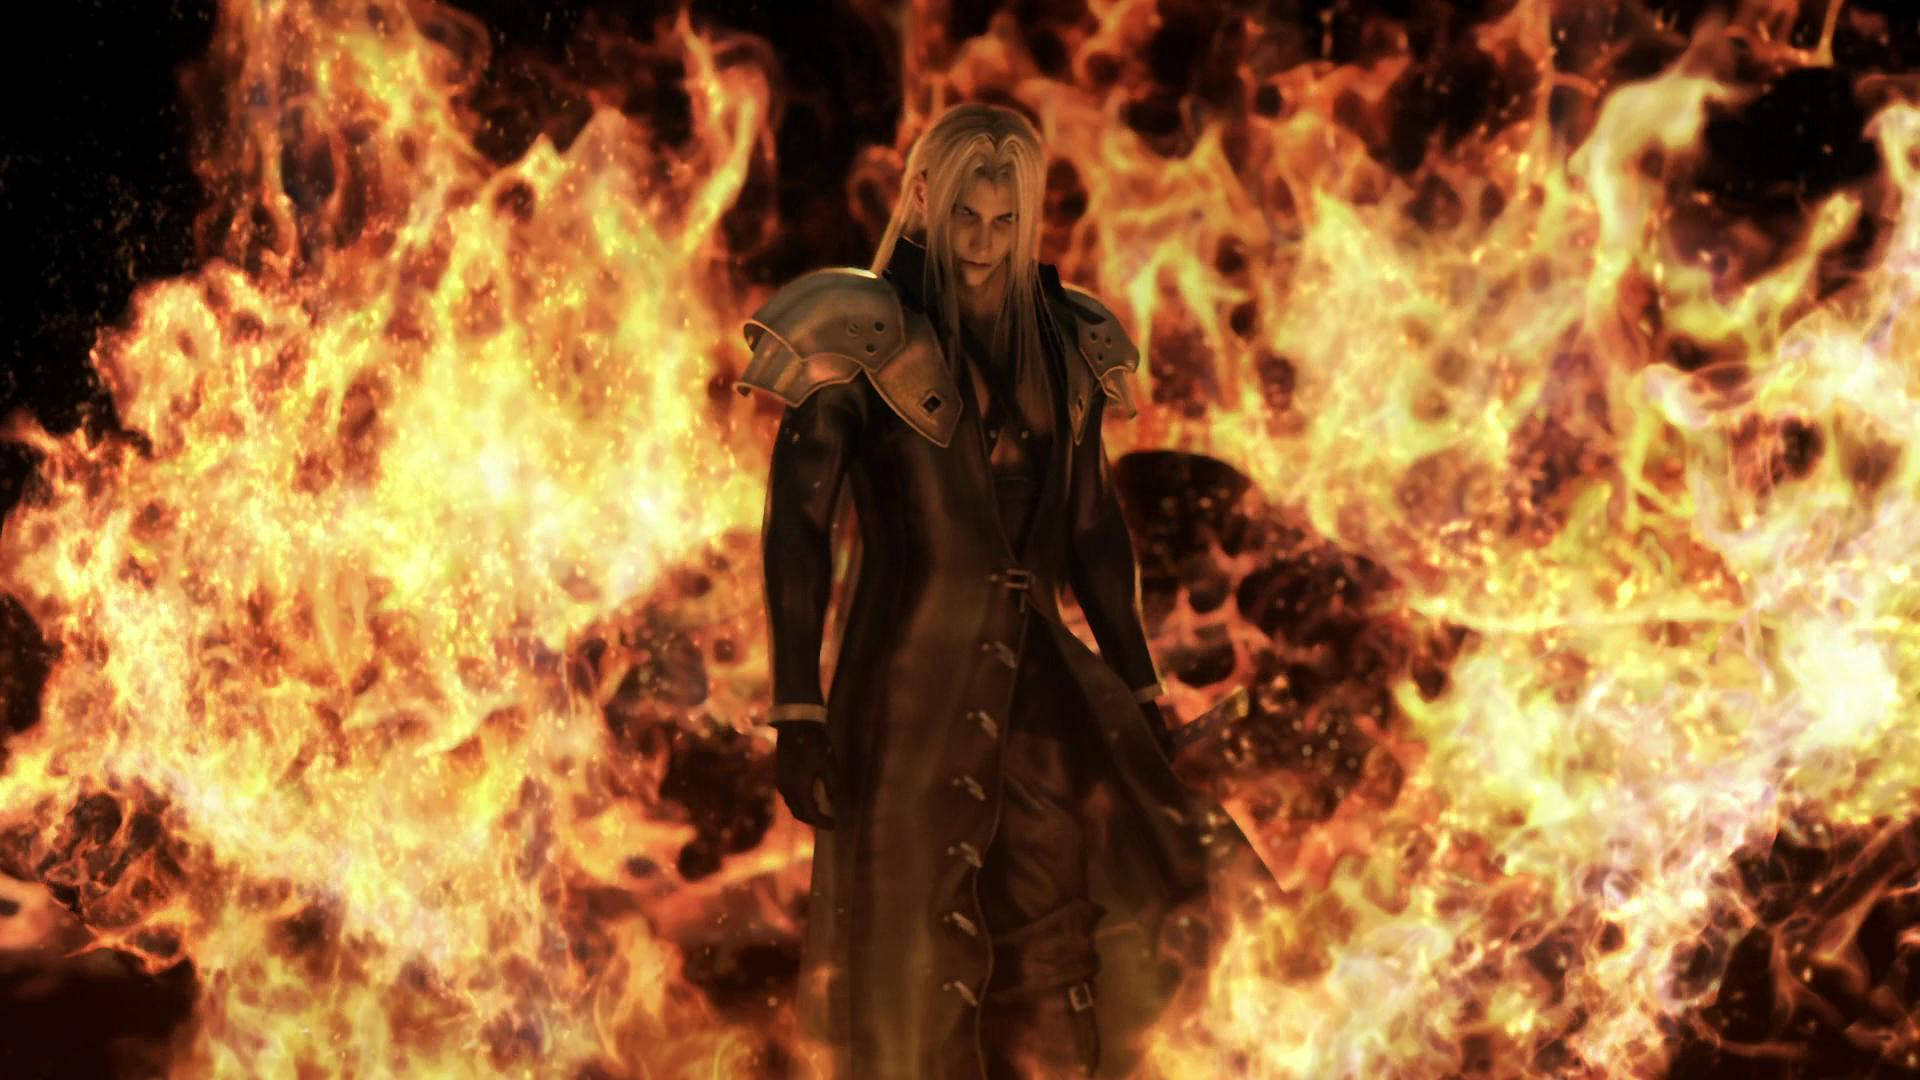 Sephiroth In Blazing Fire Wallpaper